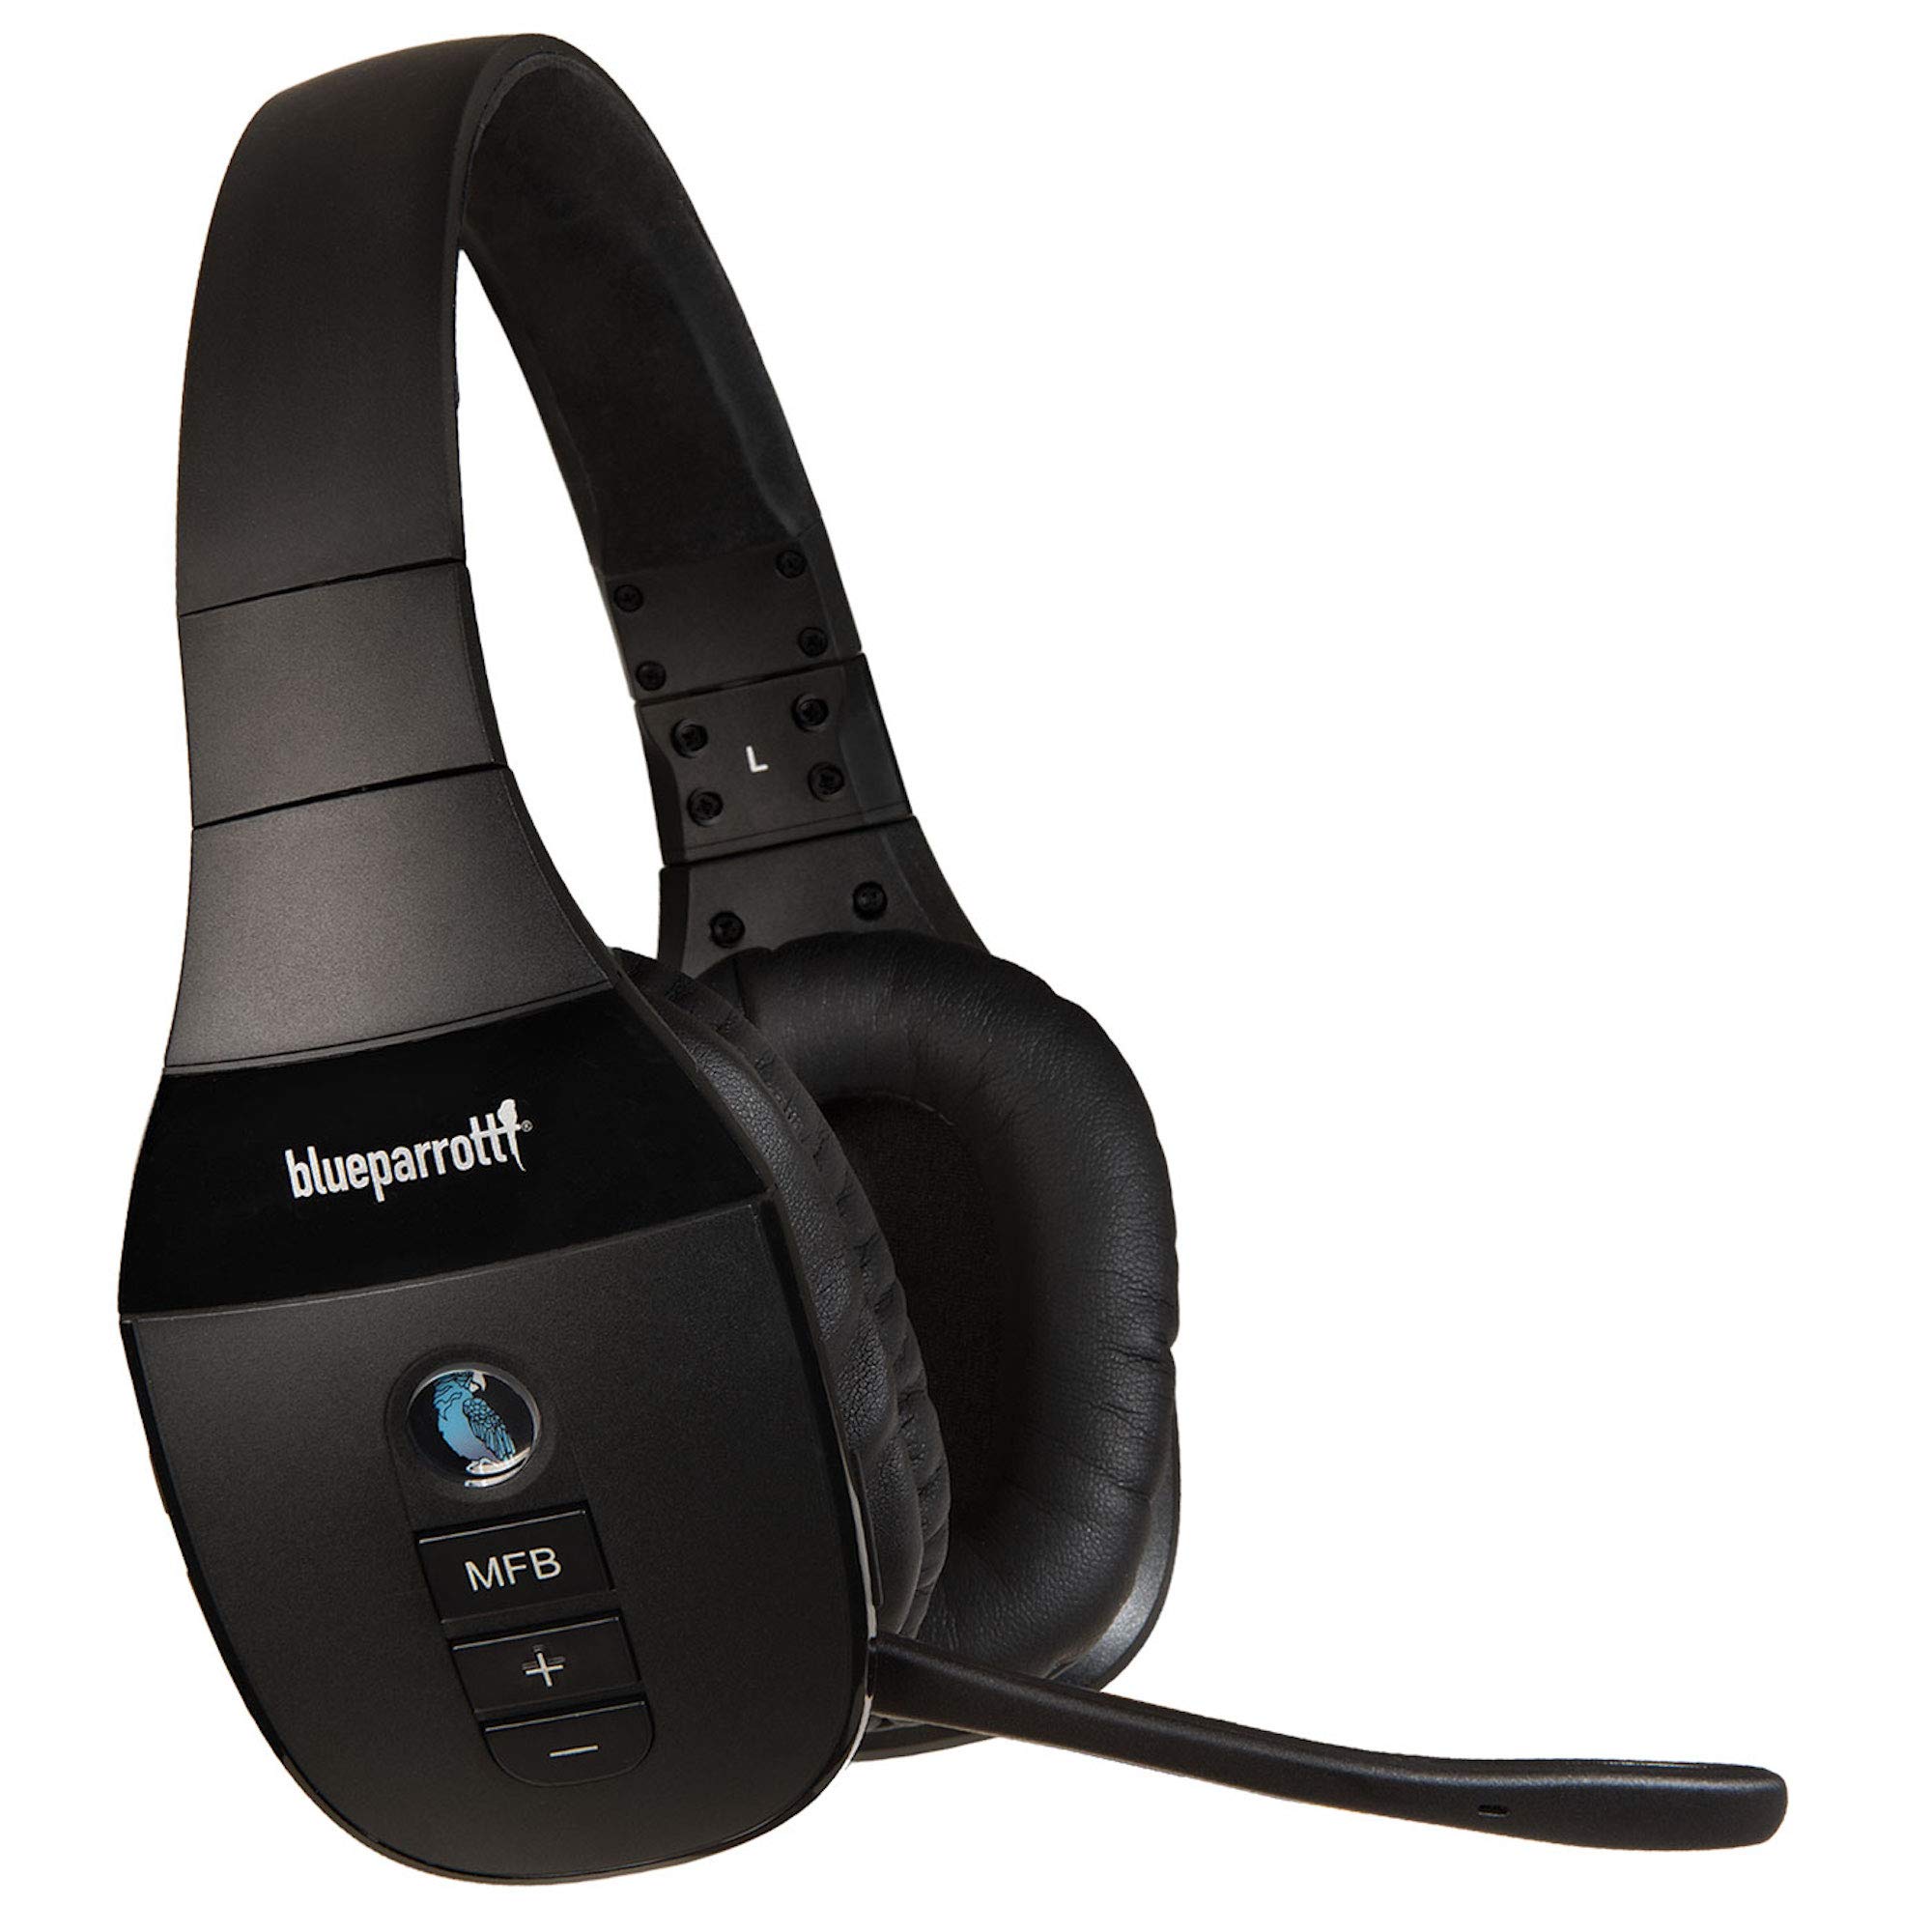 BlueParrott S450-XT 语音控制蓝牙耳机 – 行业领先的音质，无线距离远，极度舒适，通话时间长...